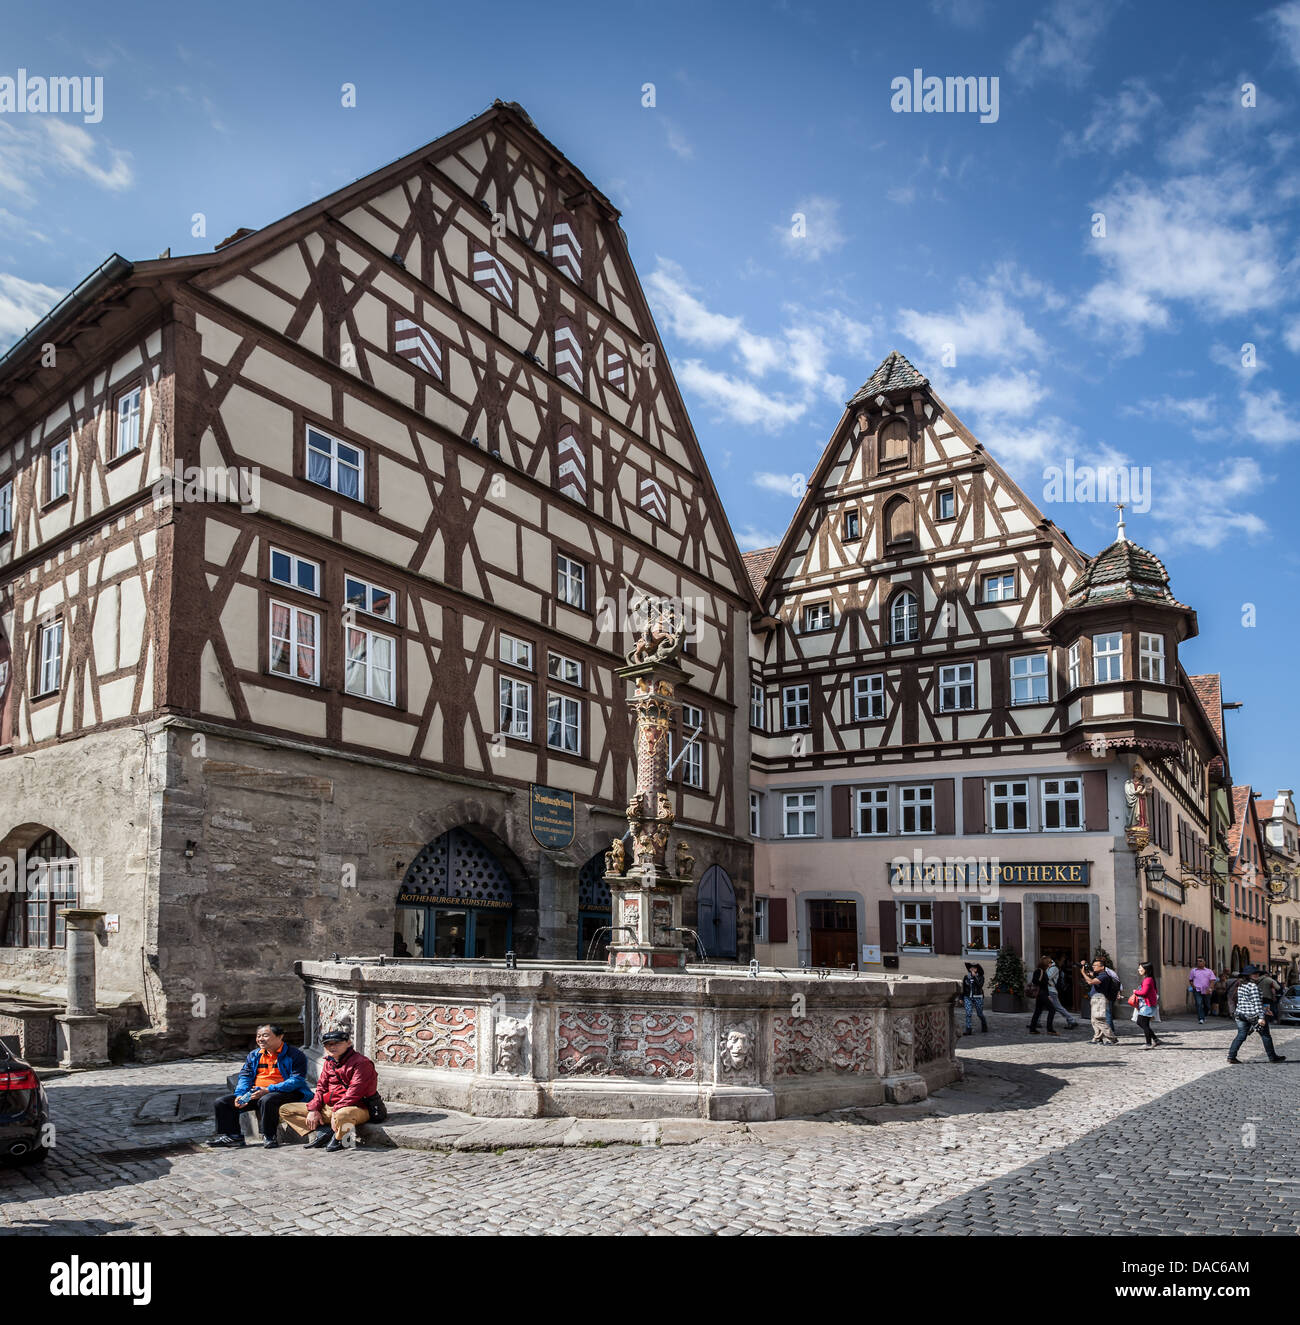 Traditional half timber-framed buildings, Rothenburg ob der Tauber, Germany, Europe. Stock Photo